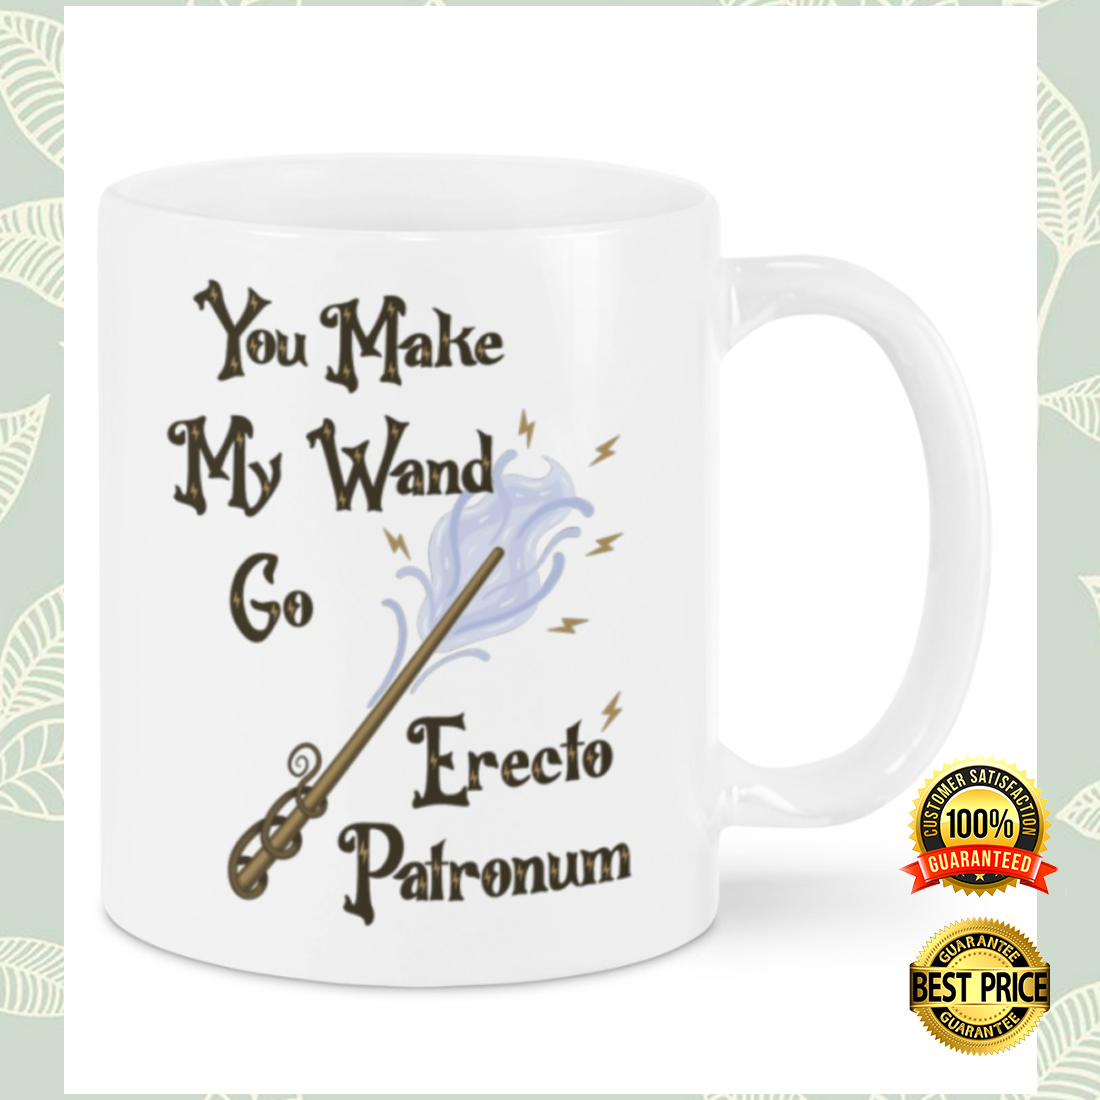 You Make My Wand Go Erecto Patronum Mug